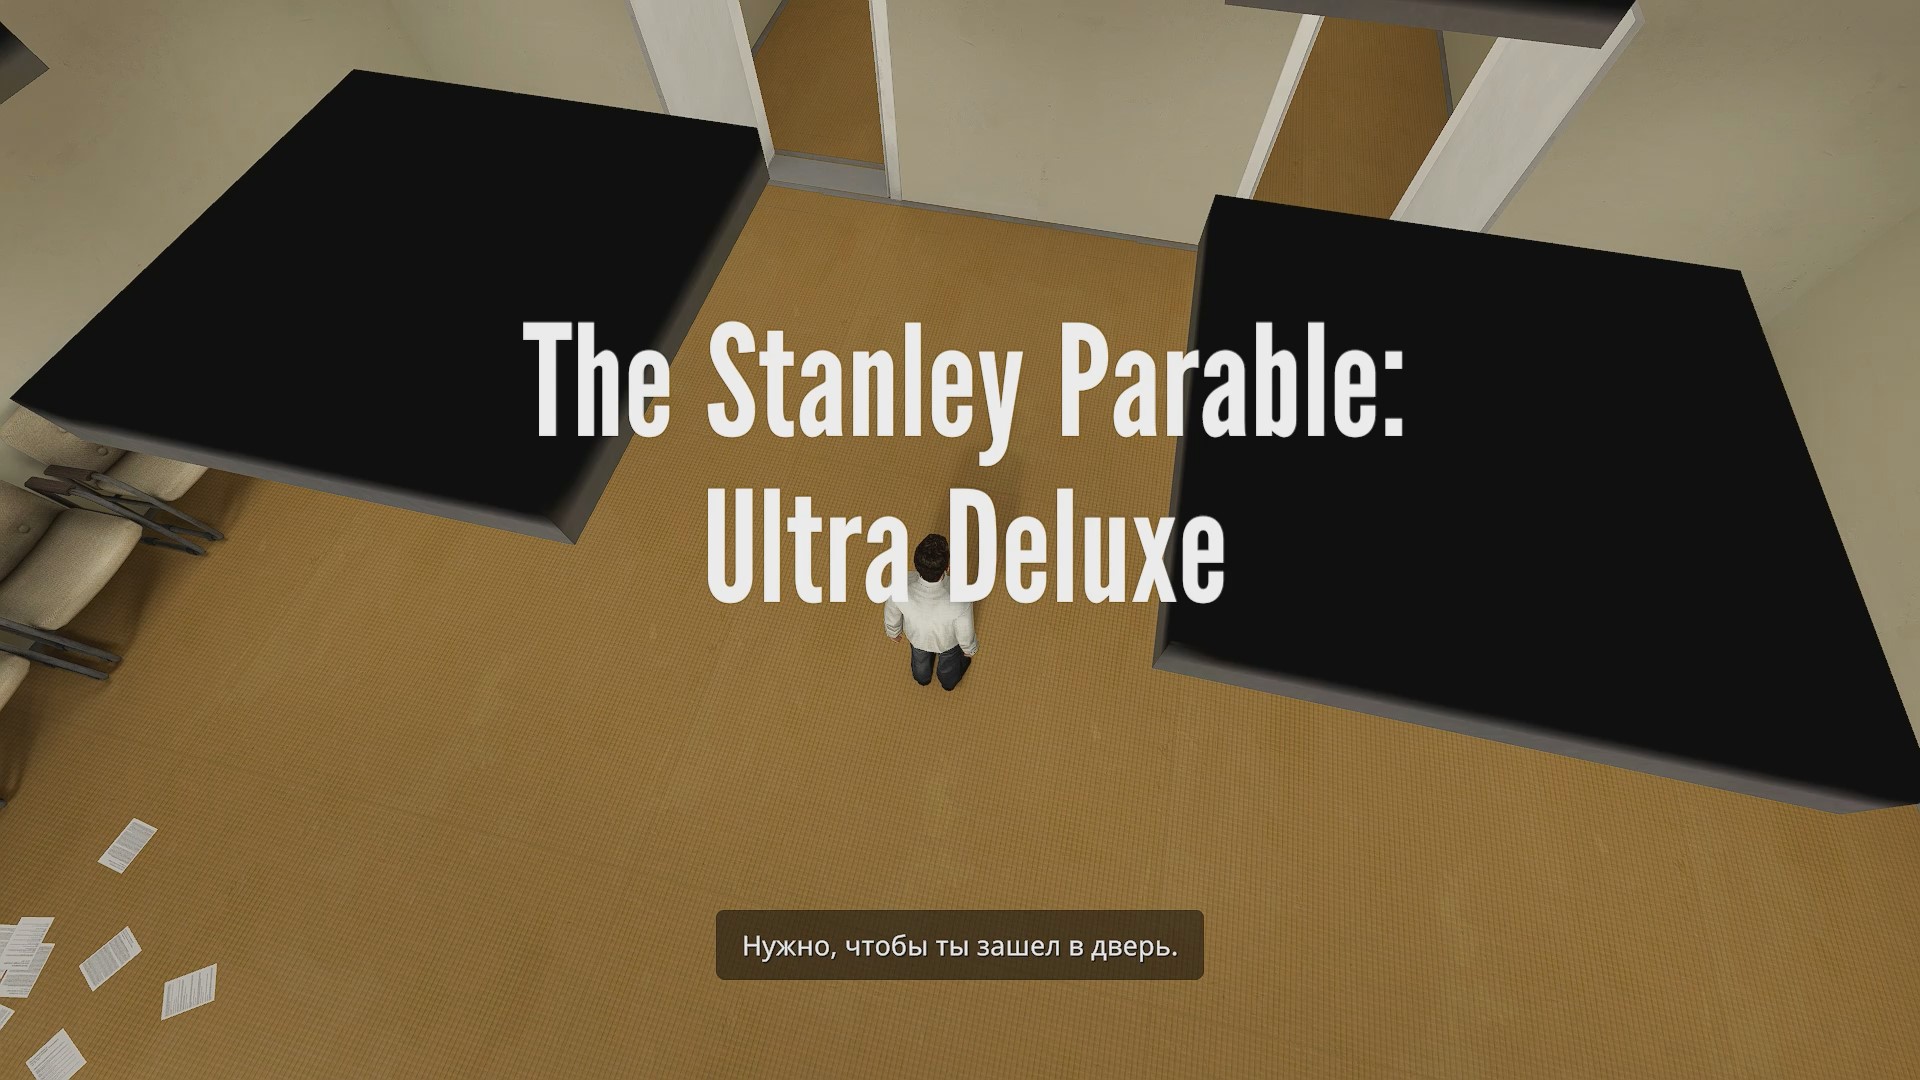 Stanley parable deluxe концовки. The Stanley Parable: Ultra Deluxe. The Stanley Parable Ultra Deluxe концовки. The Stanley Parable обложка. The Stanley Parable Ultra Deluxe схема.